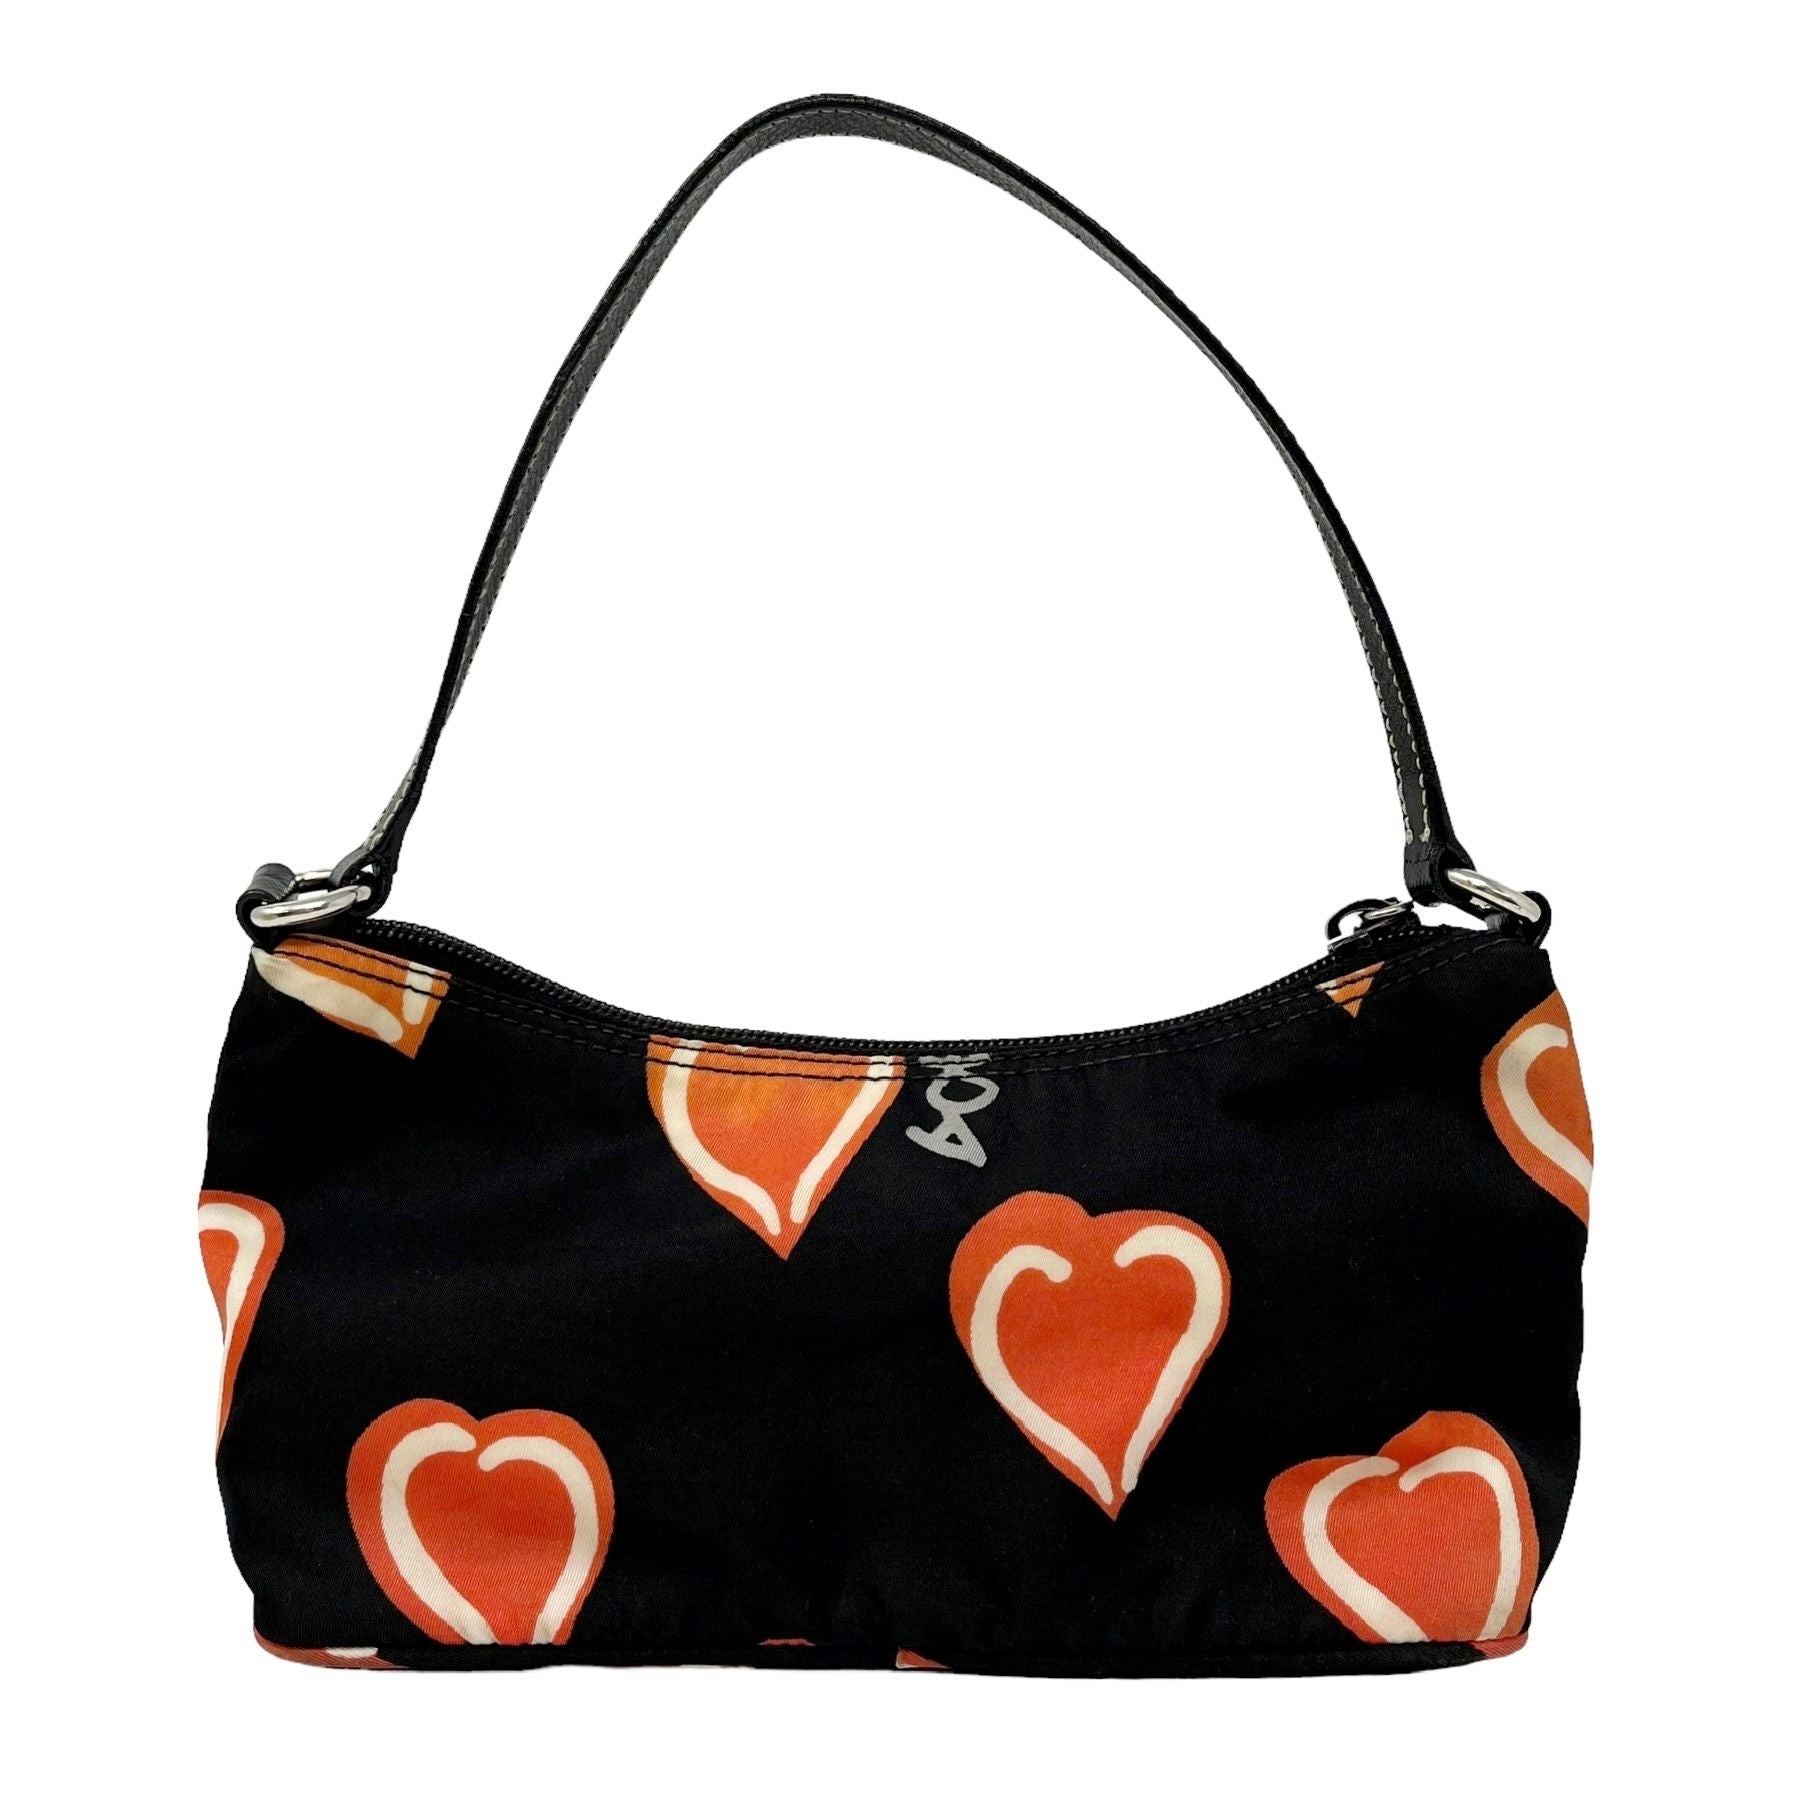 Prada Heart Nylon Shoulder Bag